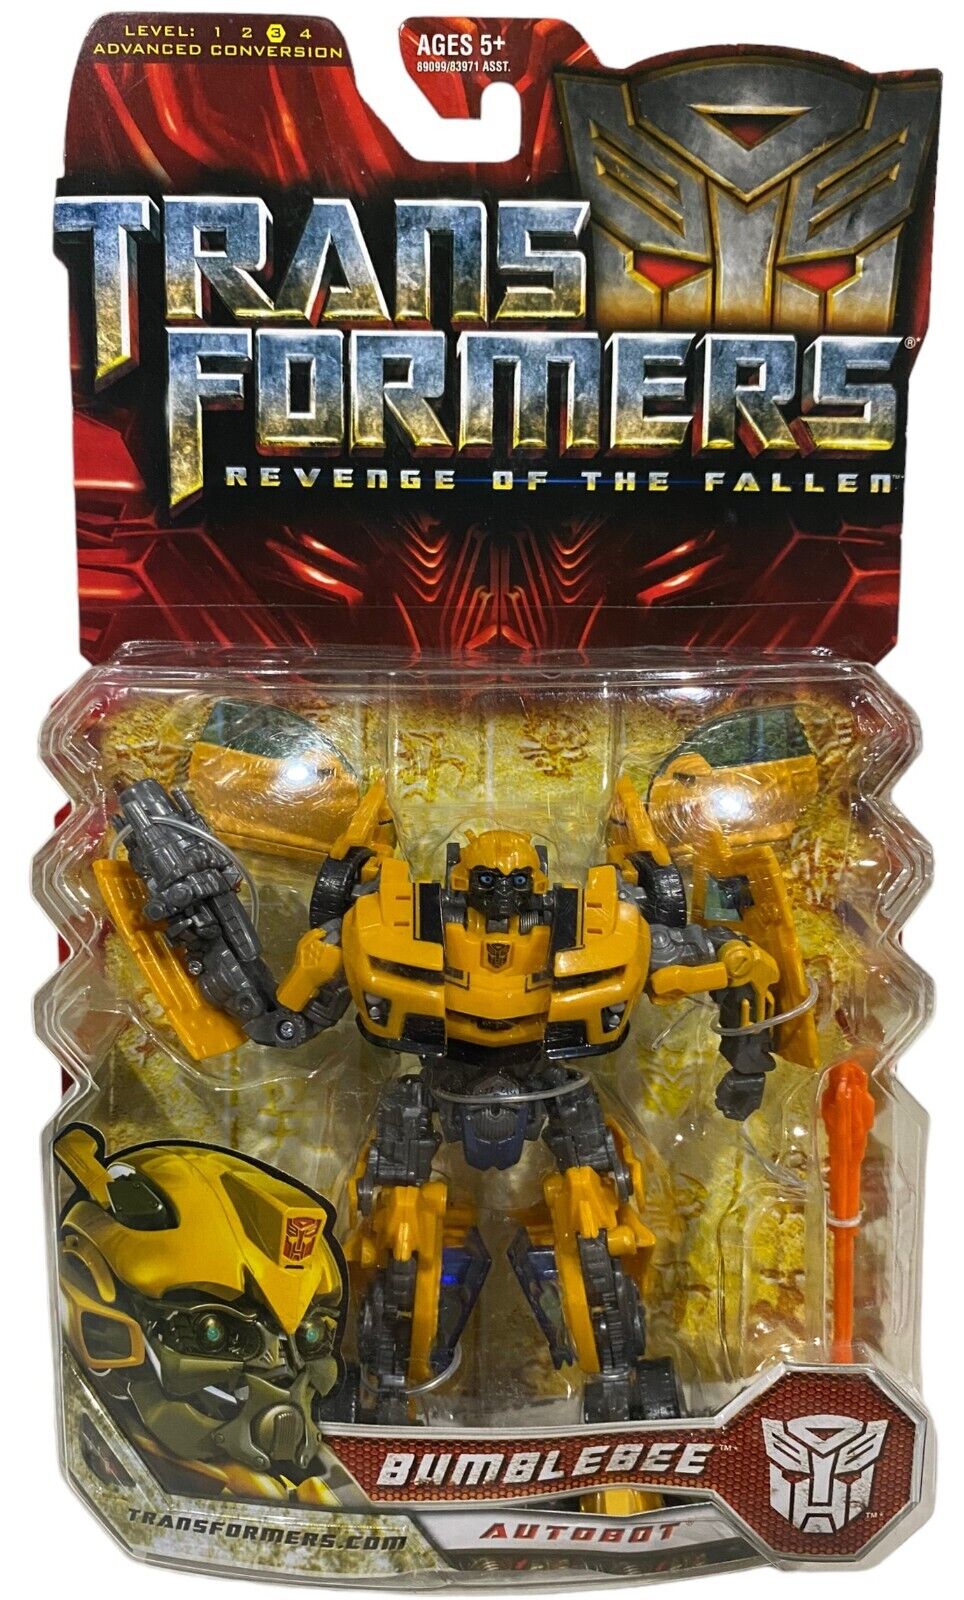 Transformers Revenge of the Fallen ROTF Deluxe Bumblebee Action Figure NEW 2008